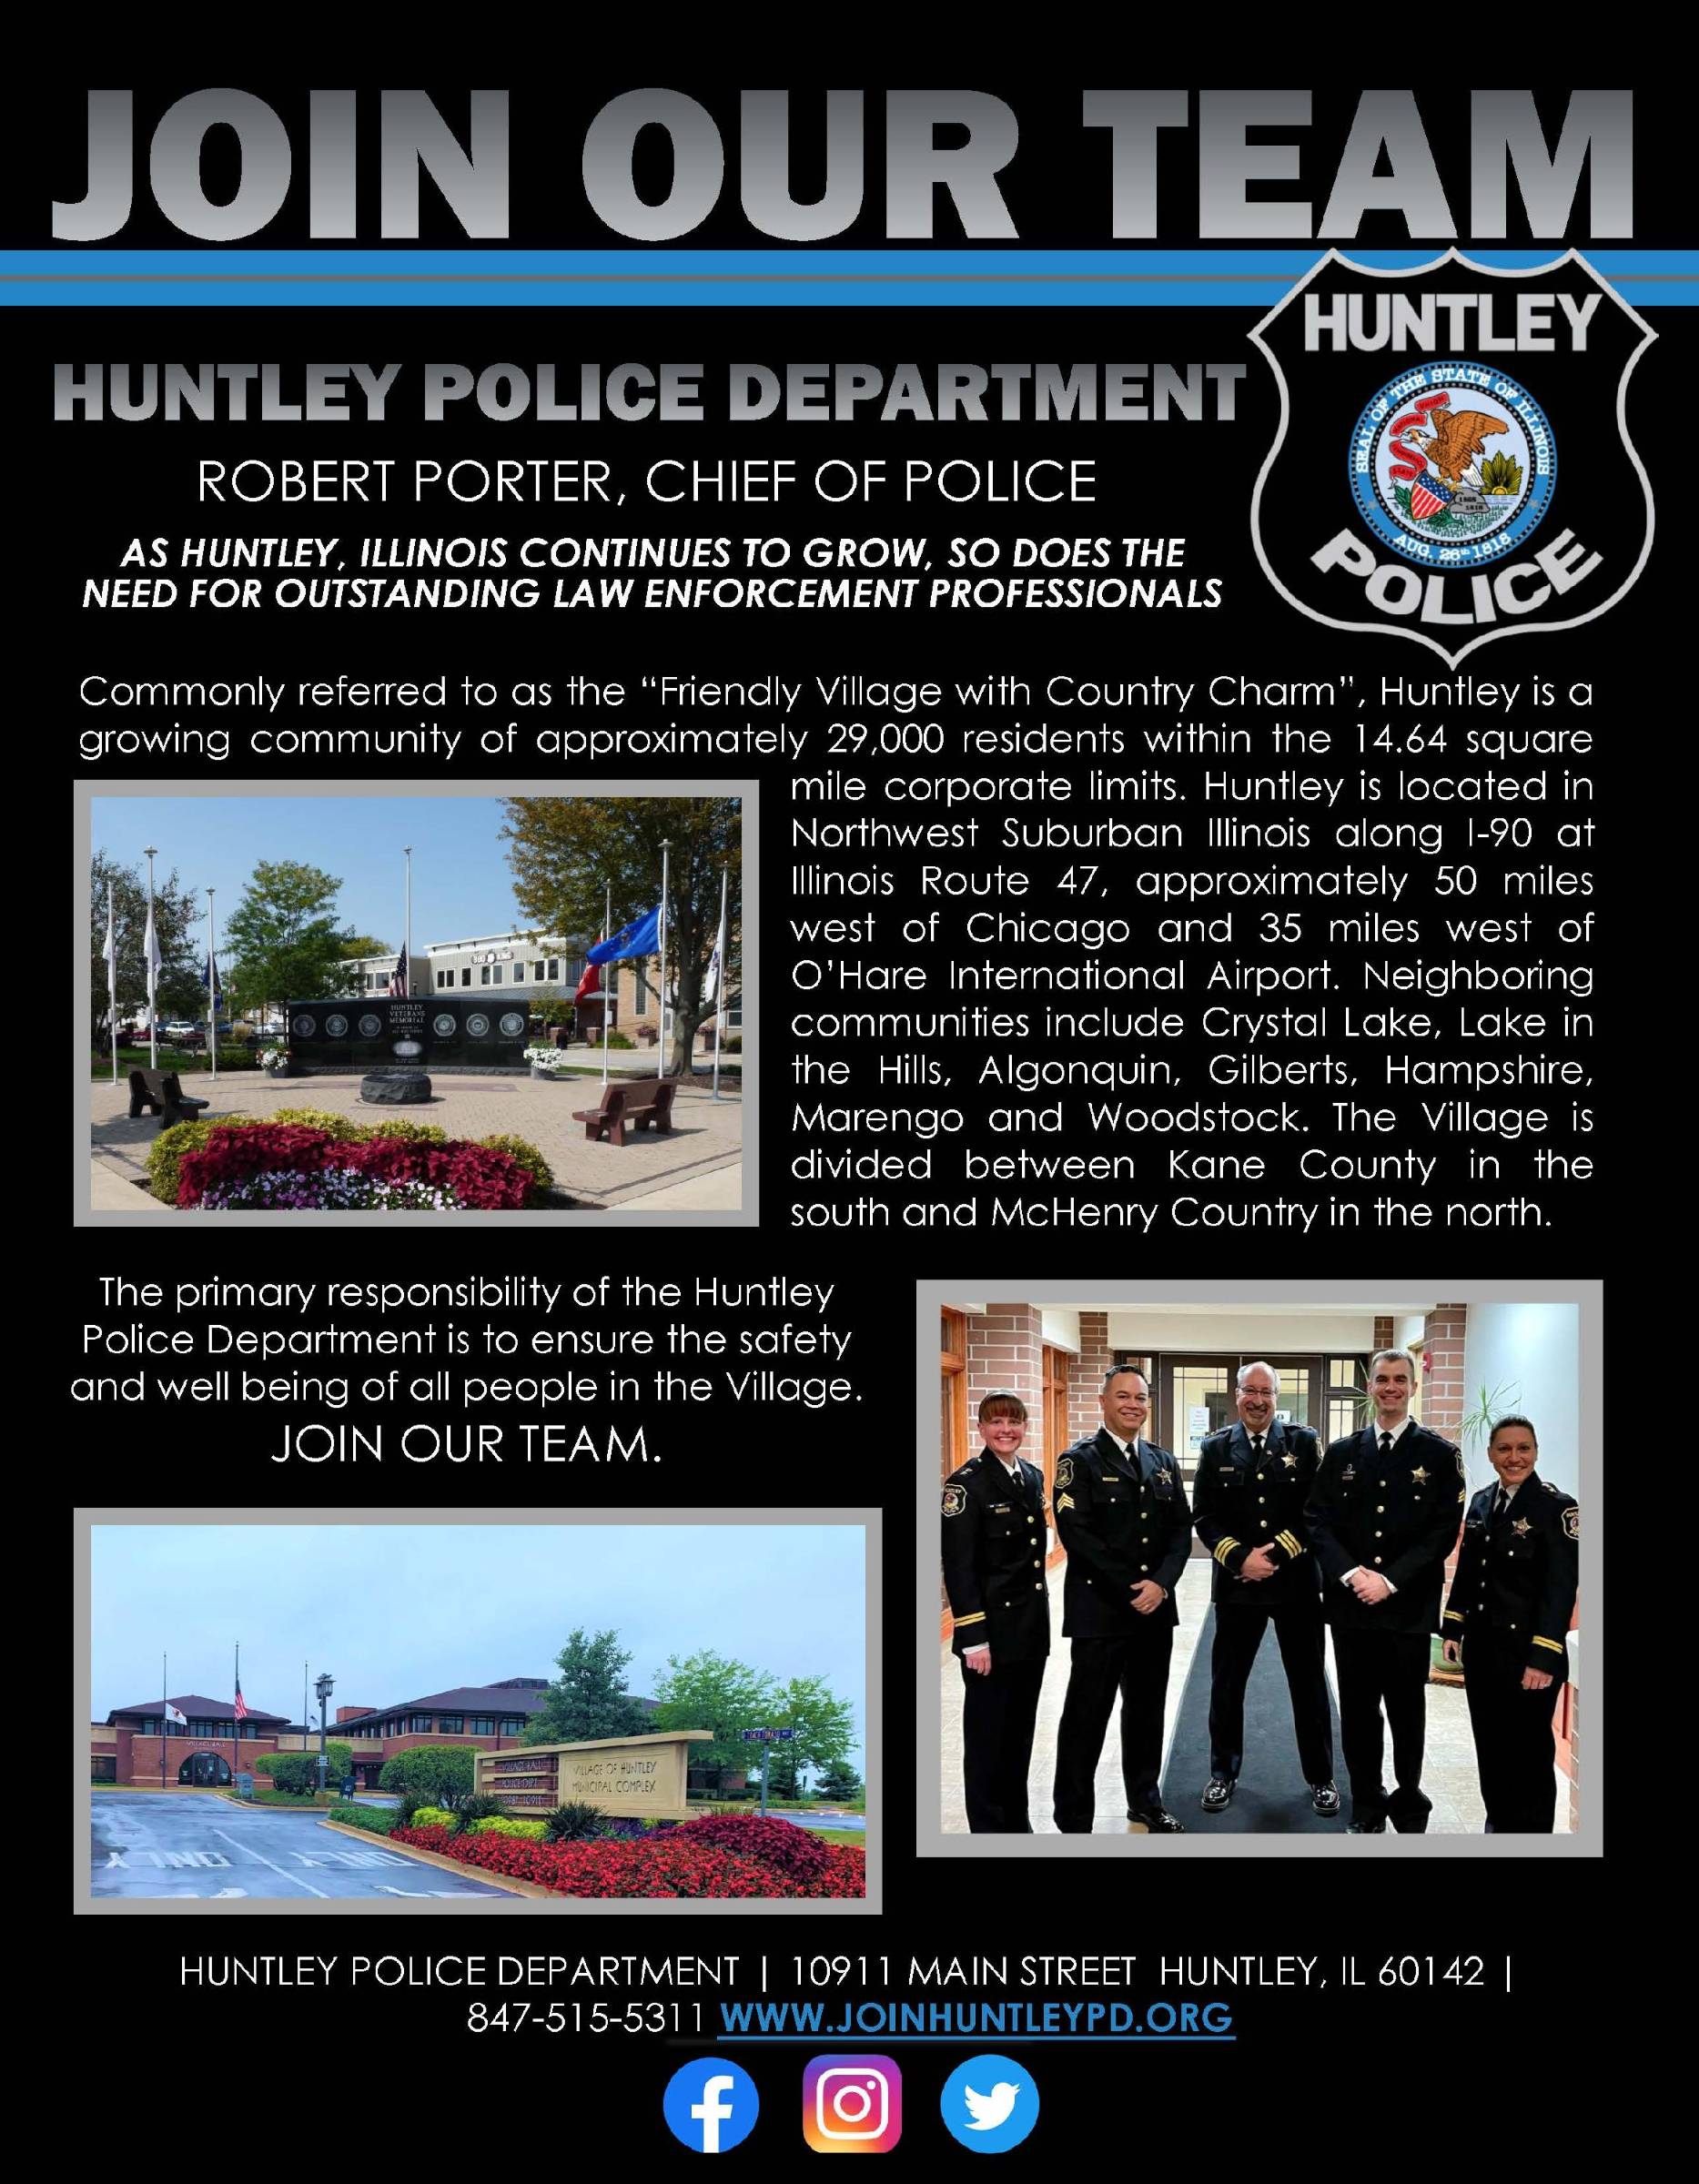 Huntley Police Brochure - images_Page_1 - Copy